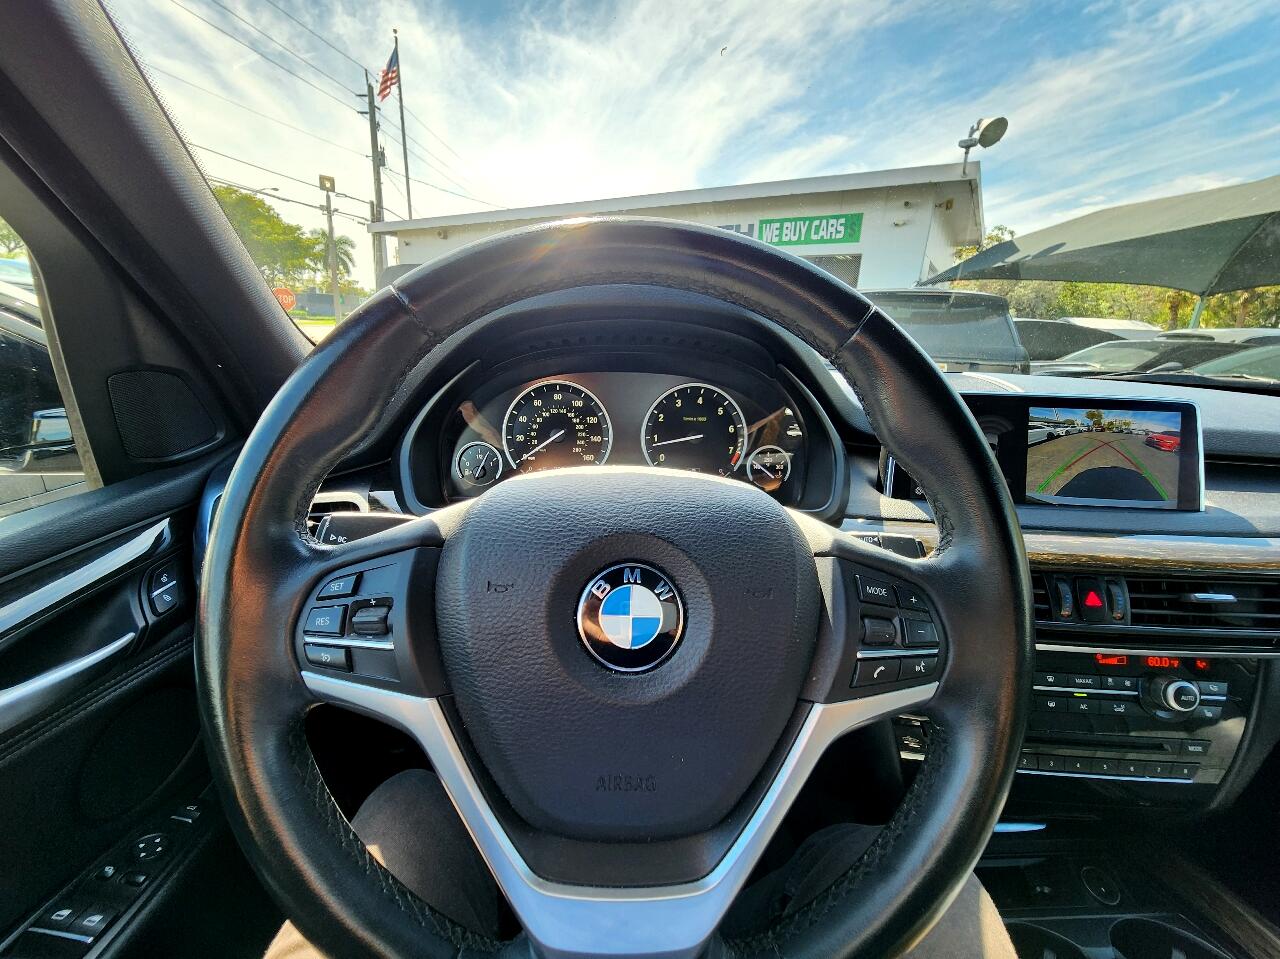 2017 BMW X5 SUV / Crossover - $22,999